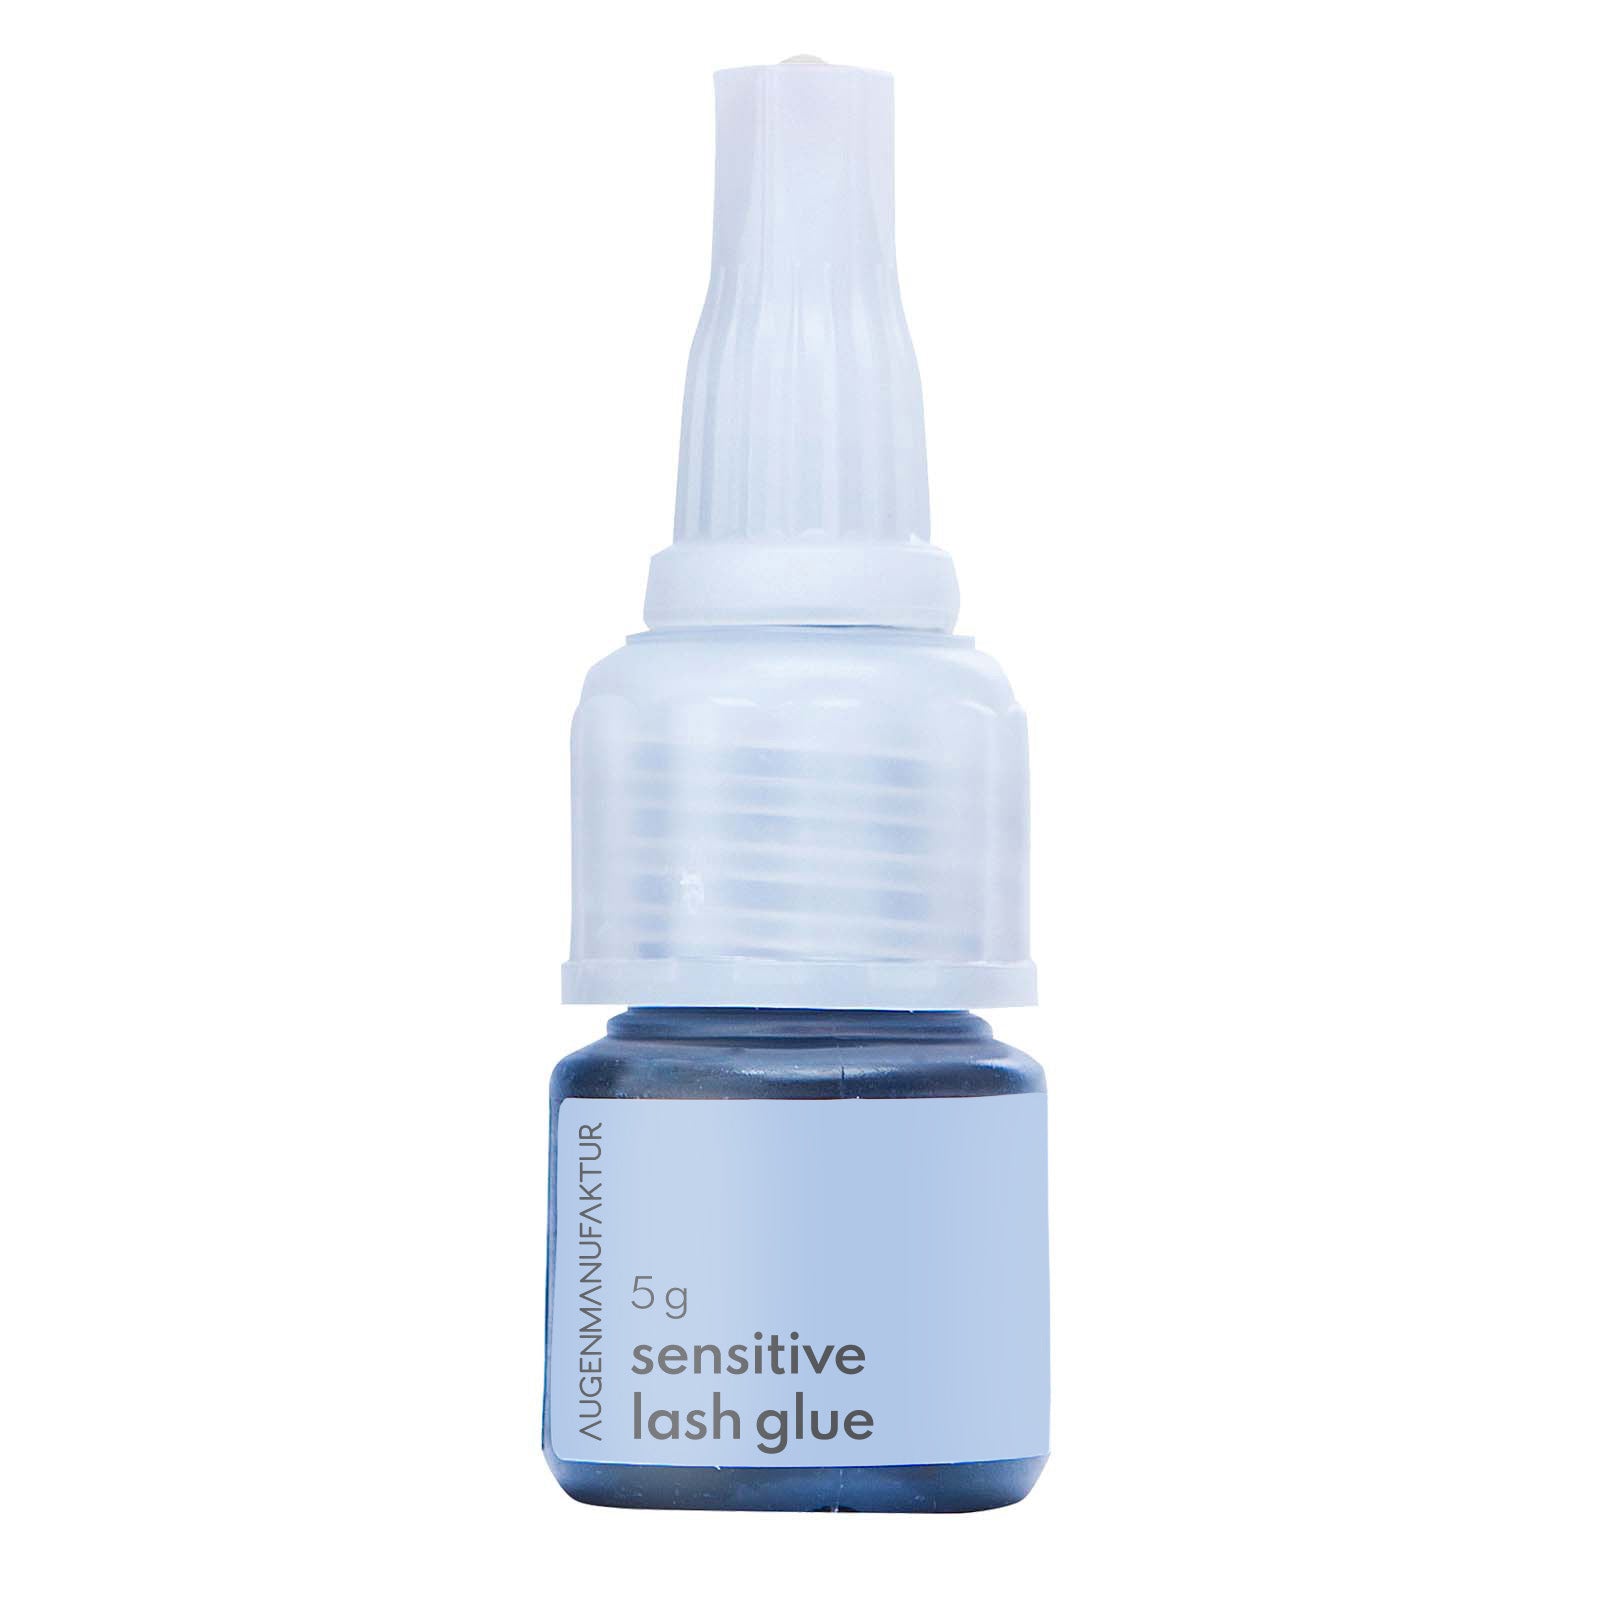 Sensitive Lash Glue